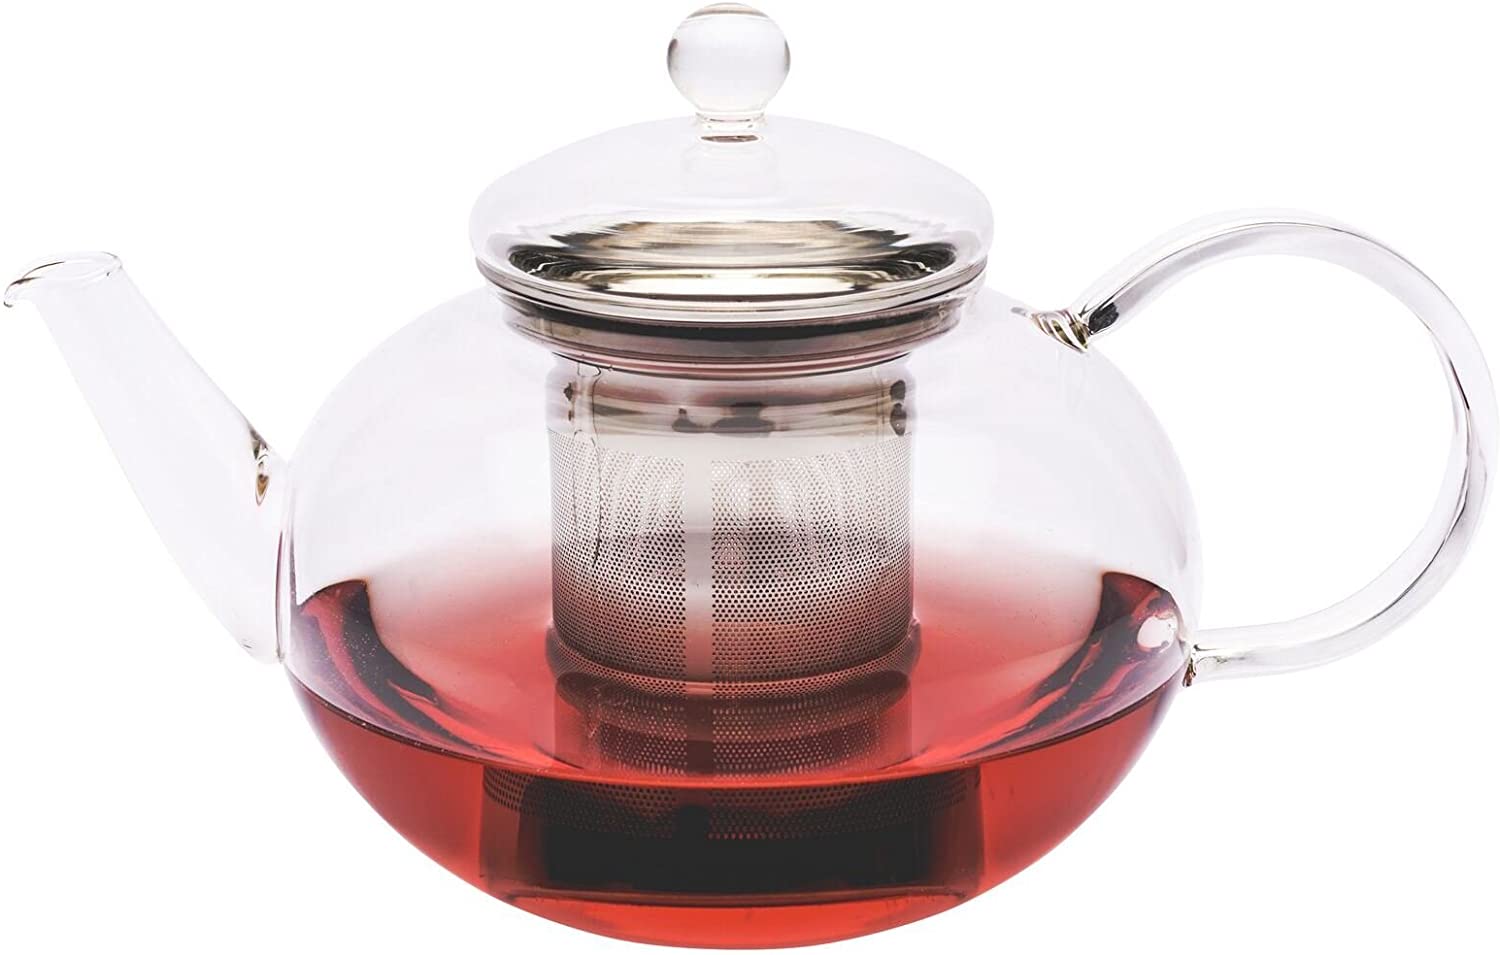 Trendglas Jena Miko Tea Pot Classic Design (1.2 L), Stainless Steel Strainer